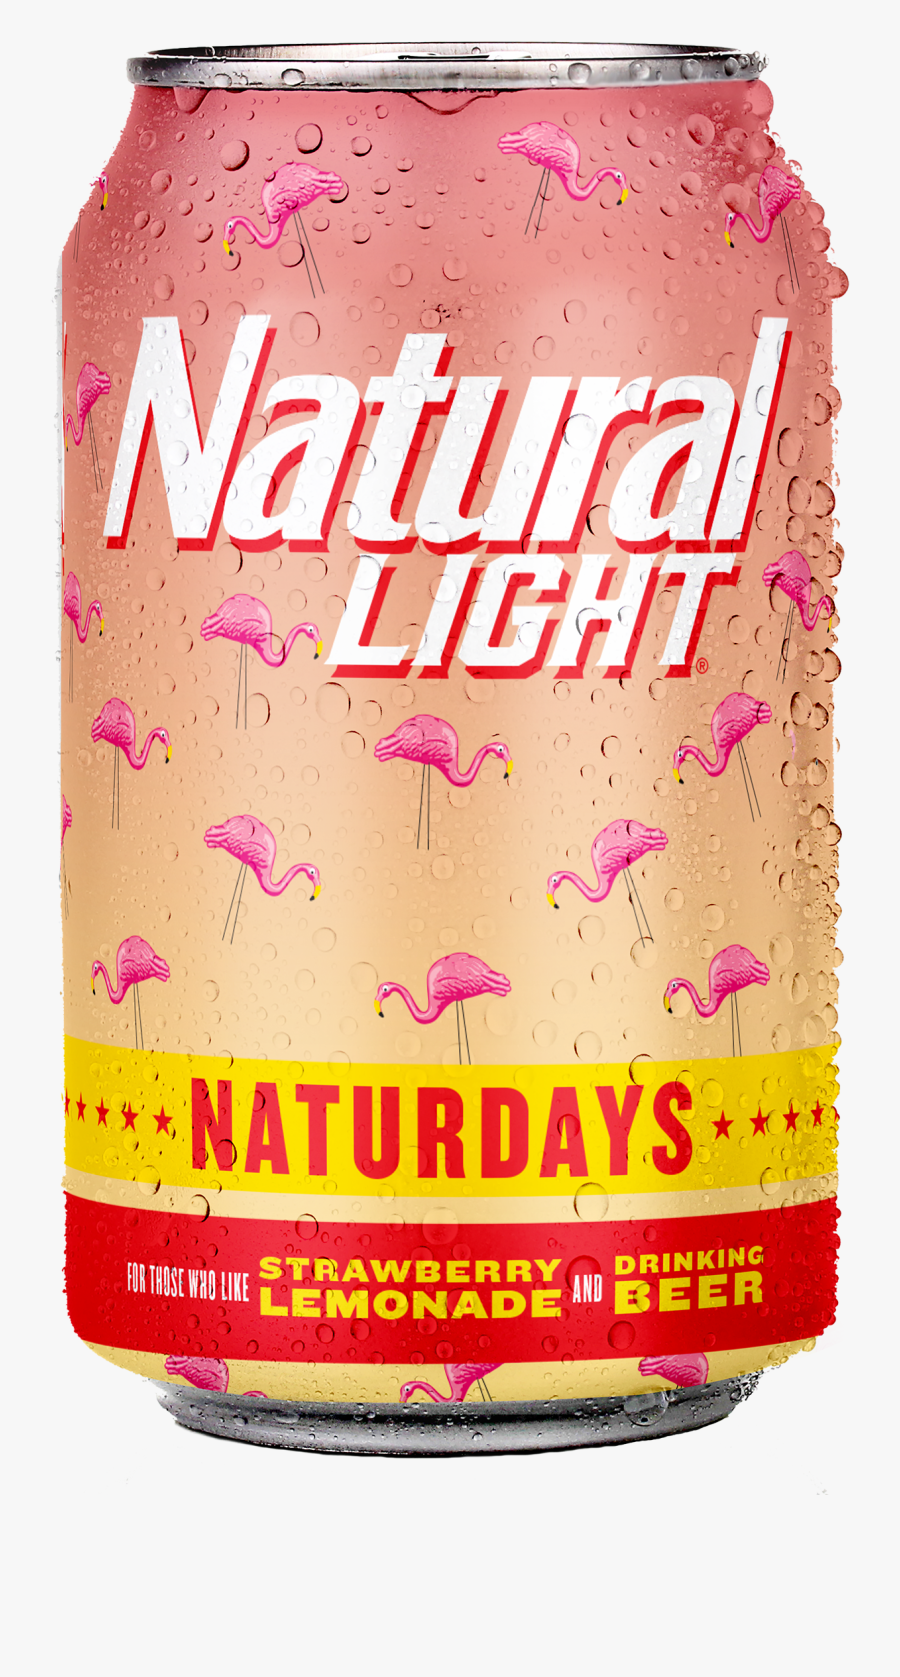 Natural Light S Naturdays Strawberry Lemonade Beers - Natural Light Strawberry Lemonade Review, Transparent Clipart